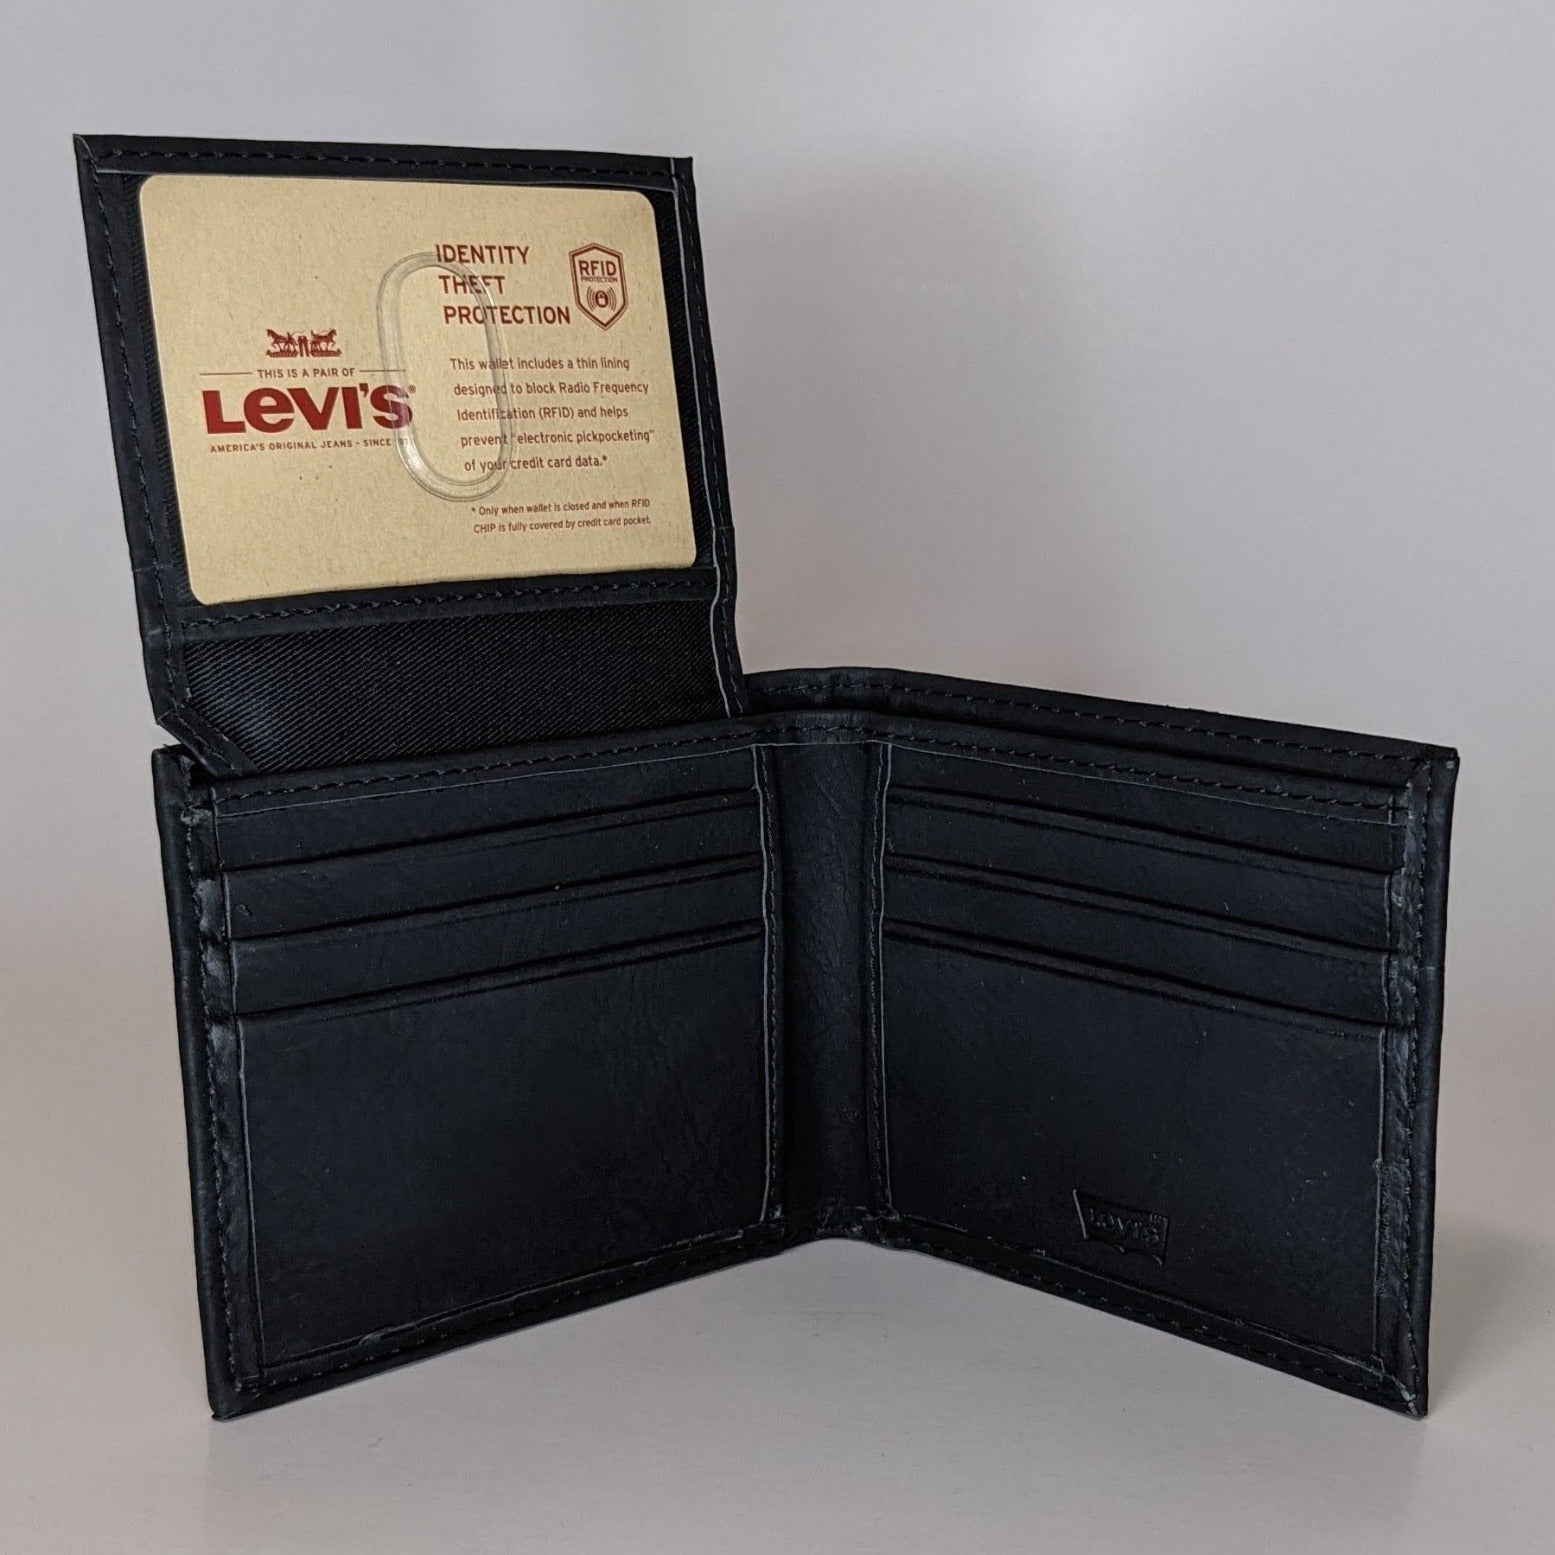 Levi's Men's RFID Blocking Credit Card ID Wallet 31LV220010 | eBay